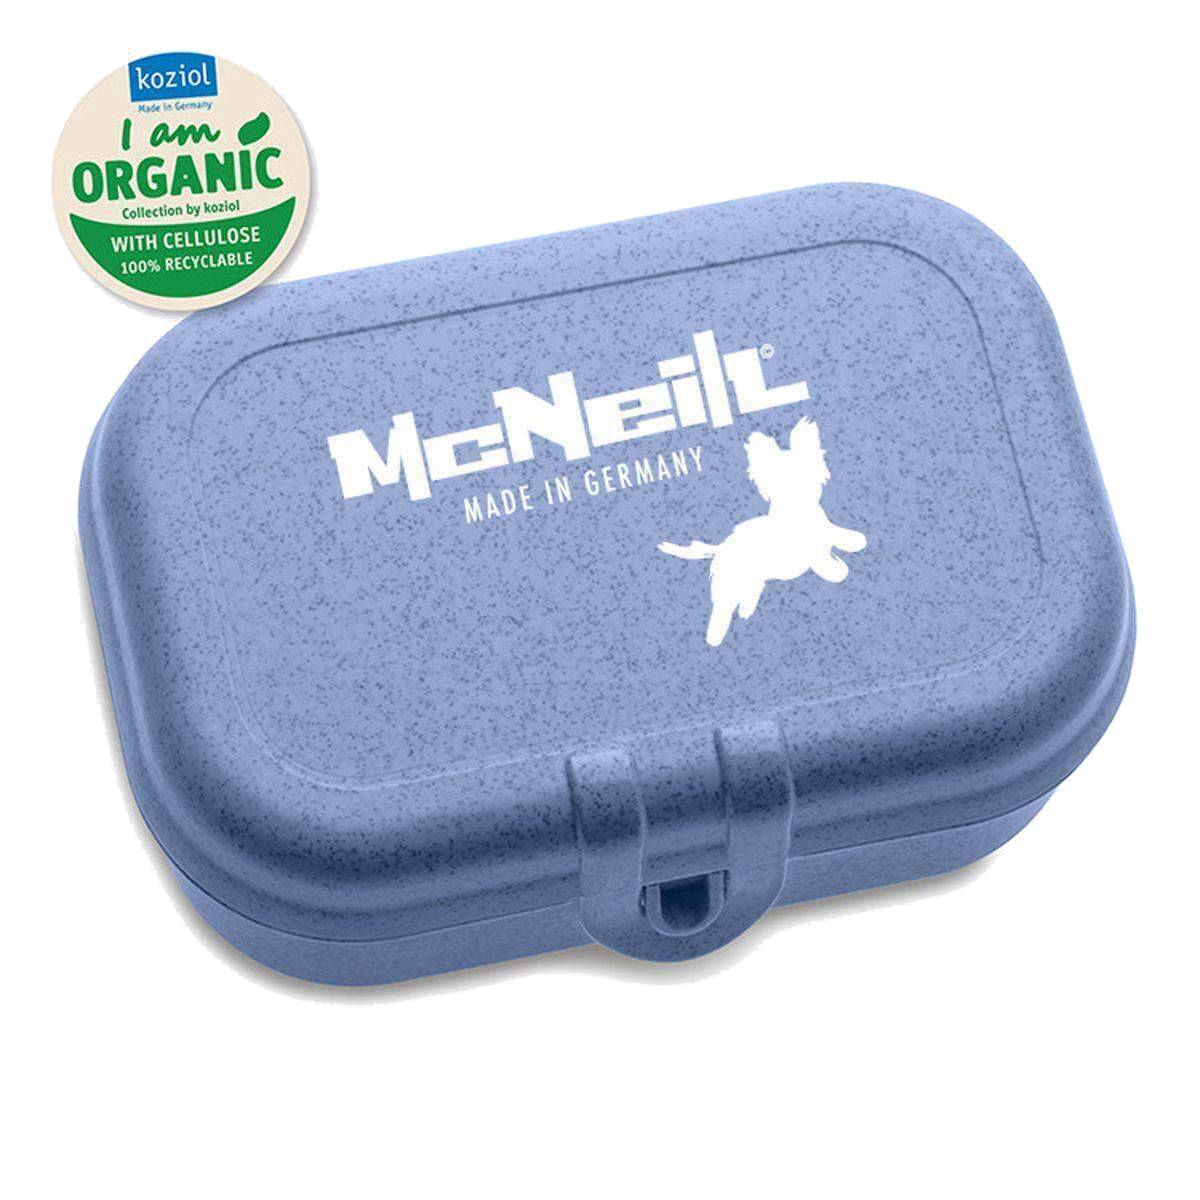 Mc Neill 'Koziol Pascal' Brotbox organic blue